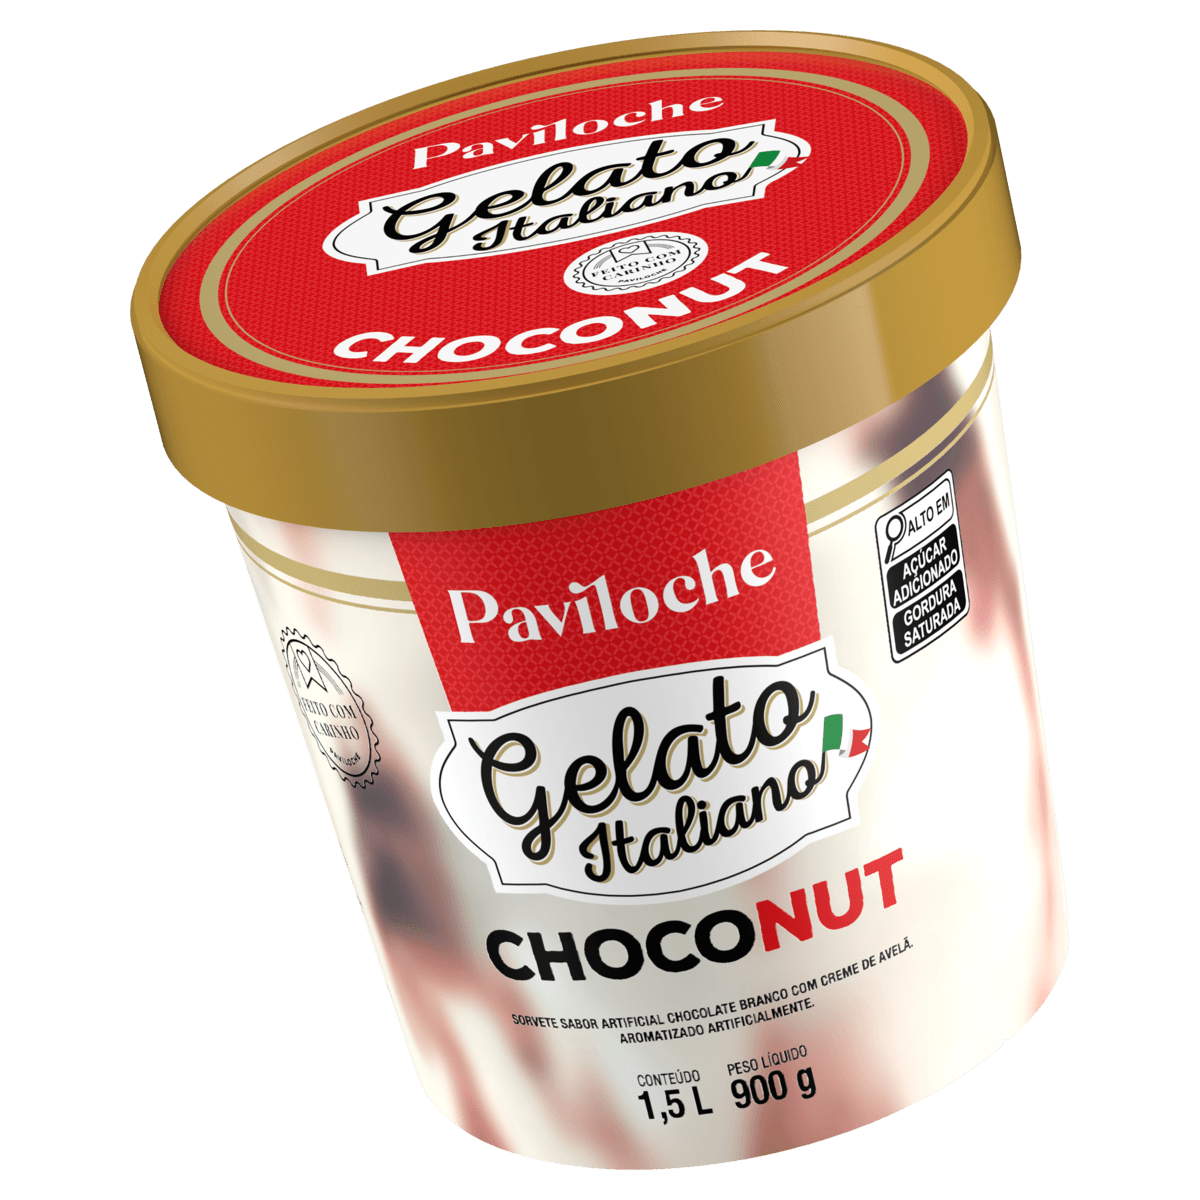 Pó para Sorvete Chocolate Yoki Pacote 150g - giassi - Giassi Supermercados